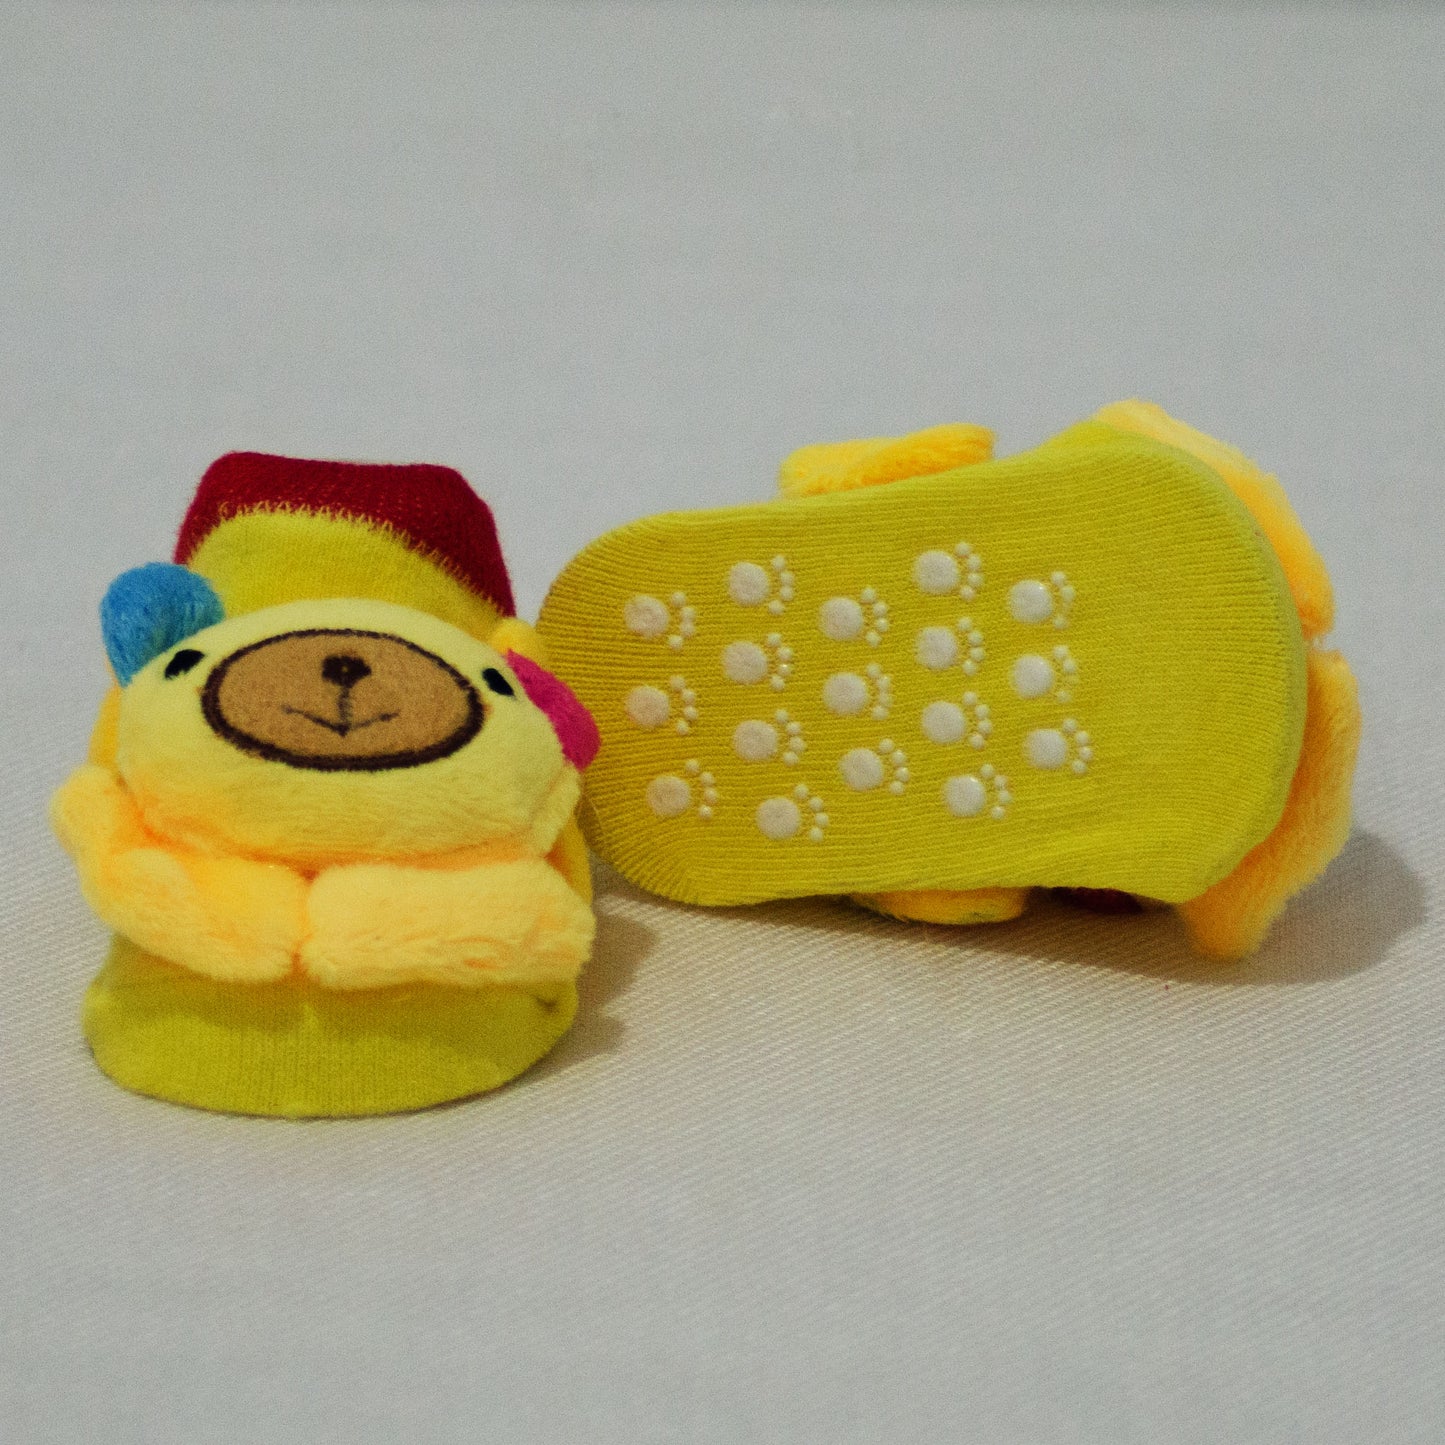 Anti Slip 3D Animal Head Baby Socks with Rubber Sole II - BabySpace Shop